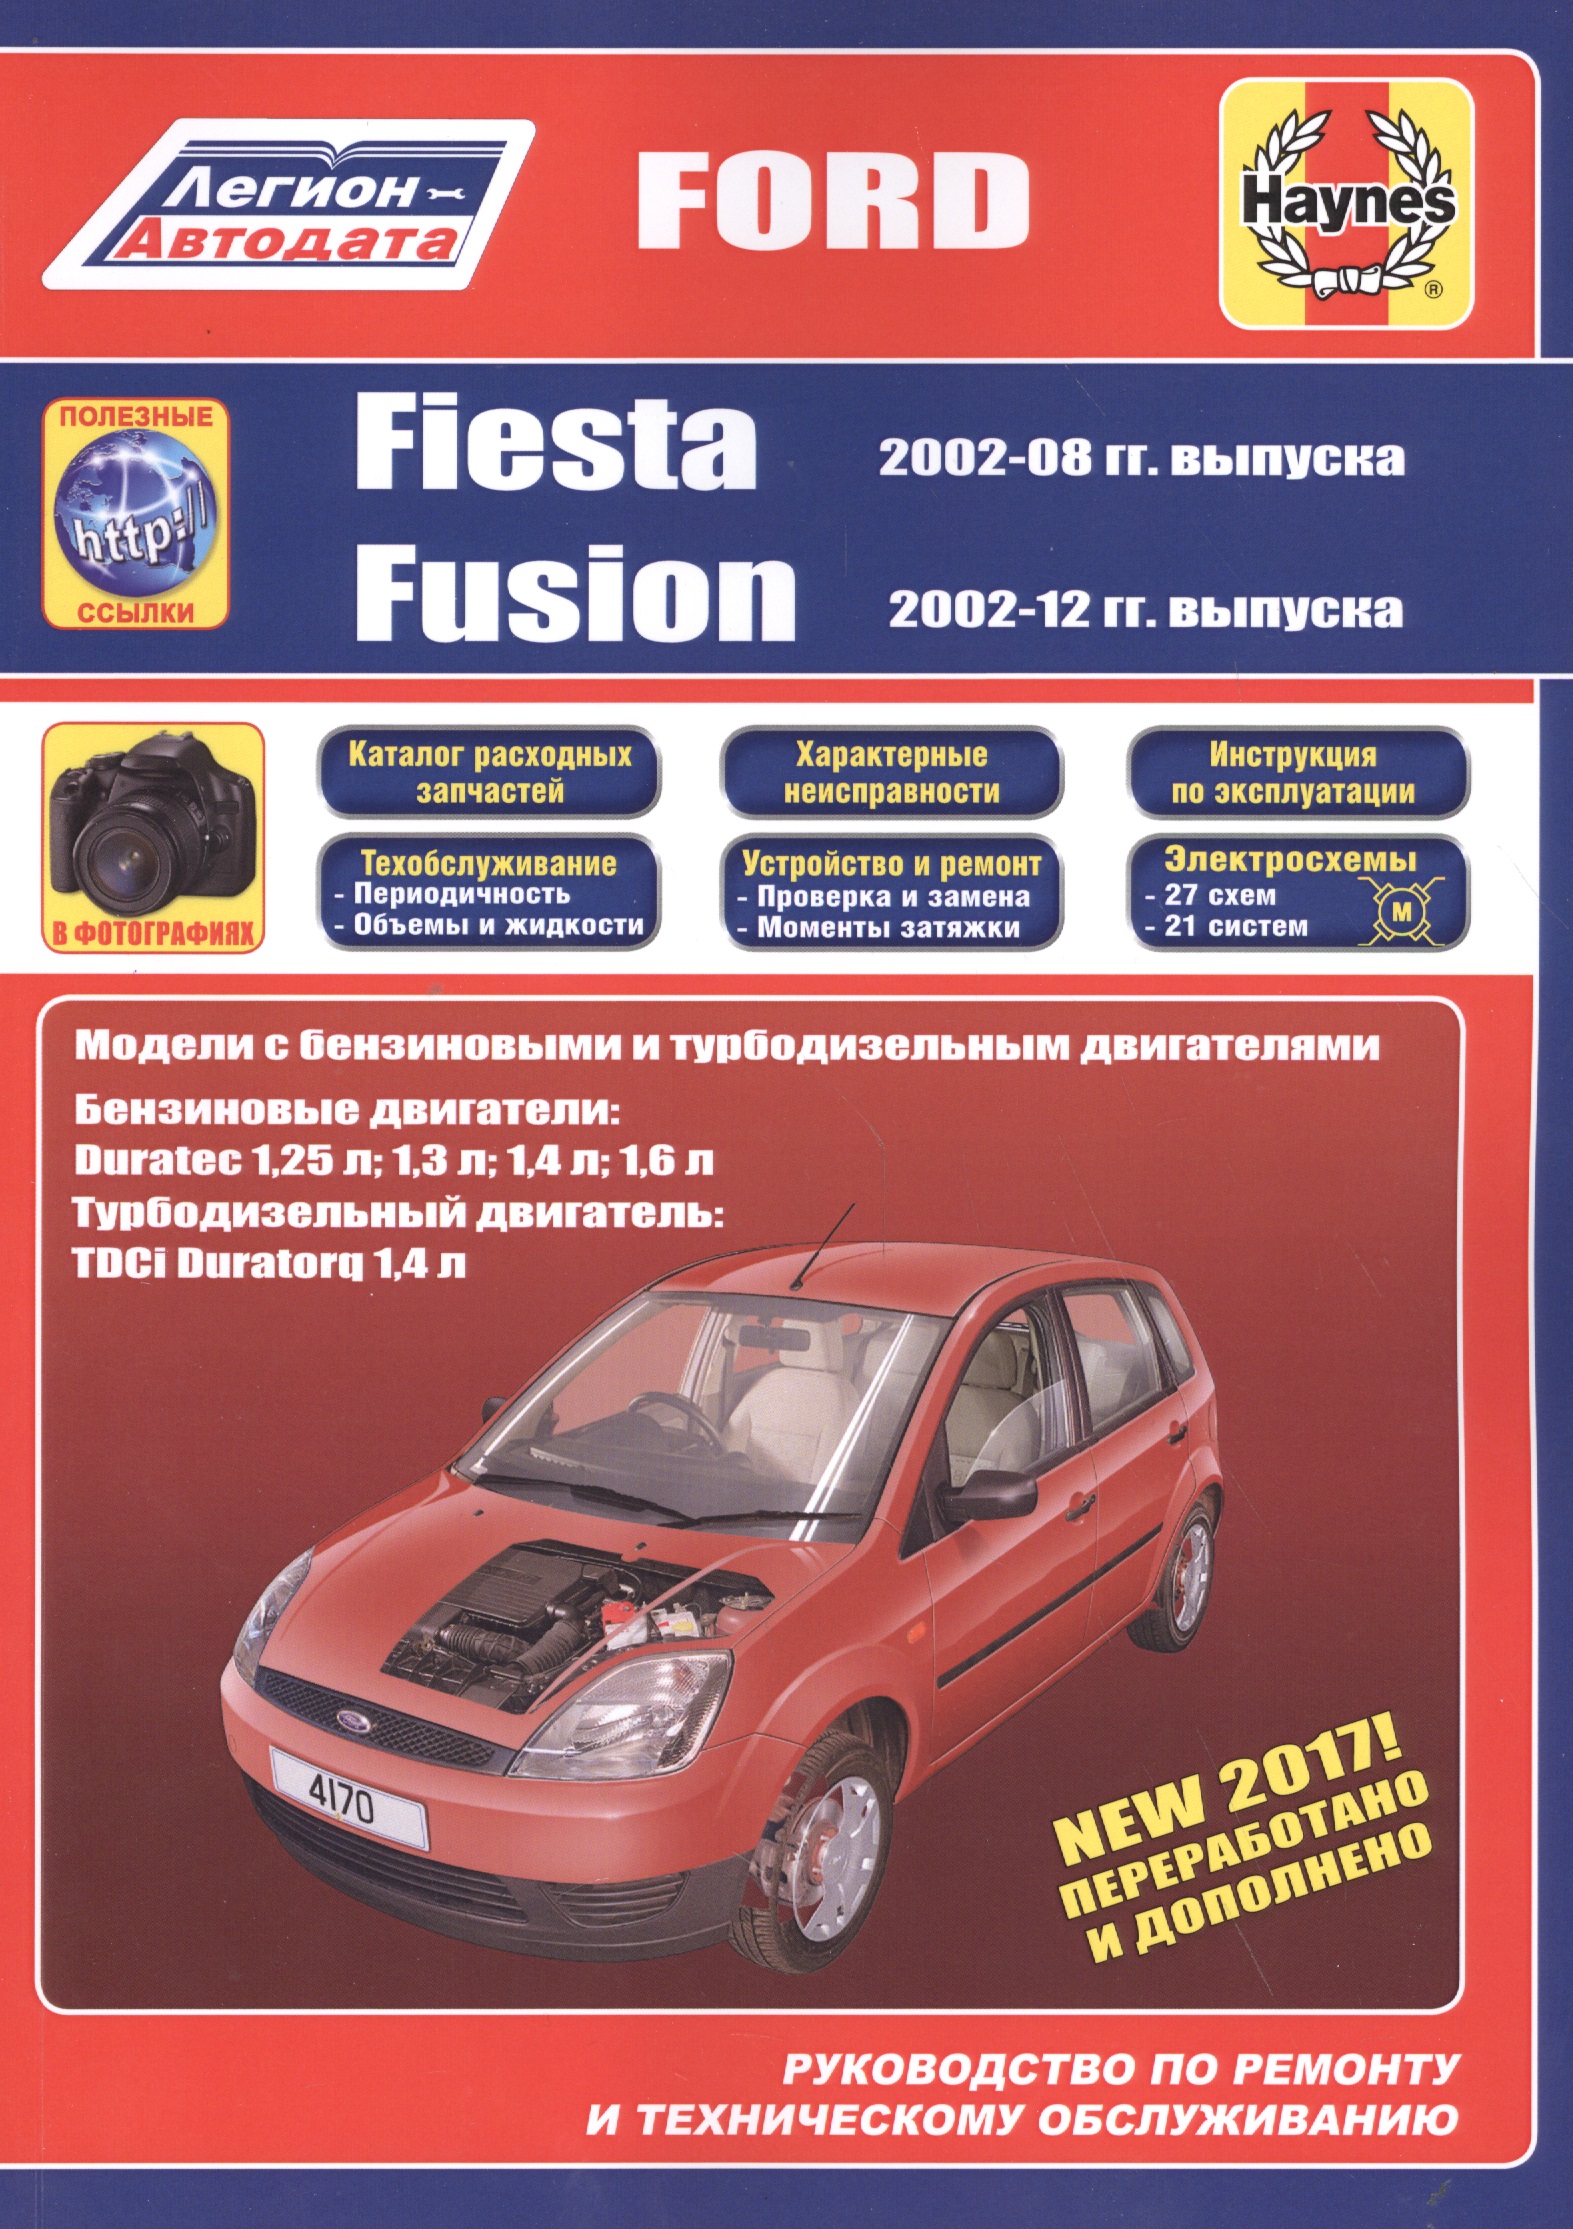 None Ford Fiesta & Fusion 2002-08/12 бензин и дизель. Ремонт. Эксплуатация. ТО (ч/б фотографии+Каталог расходных з/ч, Характерные неисправности)